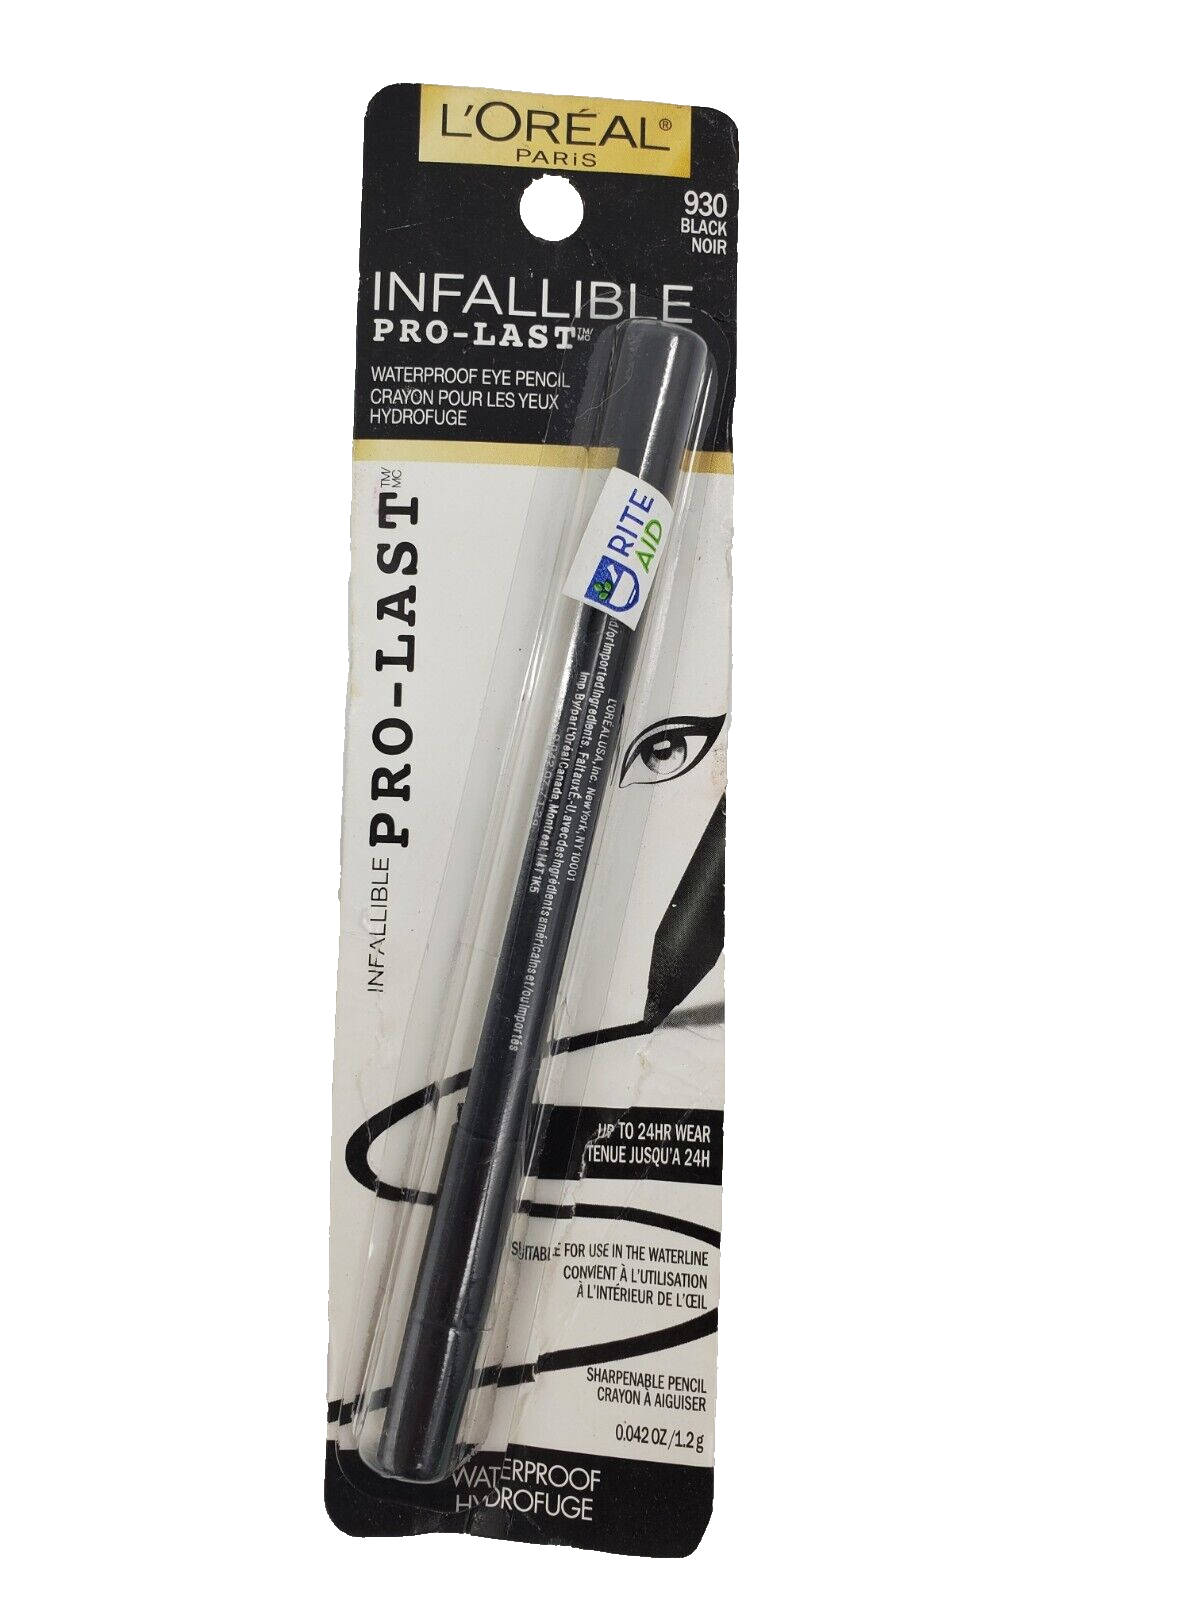 Loreal Paris Infallible Pro-Last Waterproof Eye Pencil 930 Black - $9.99